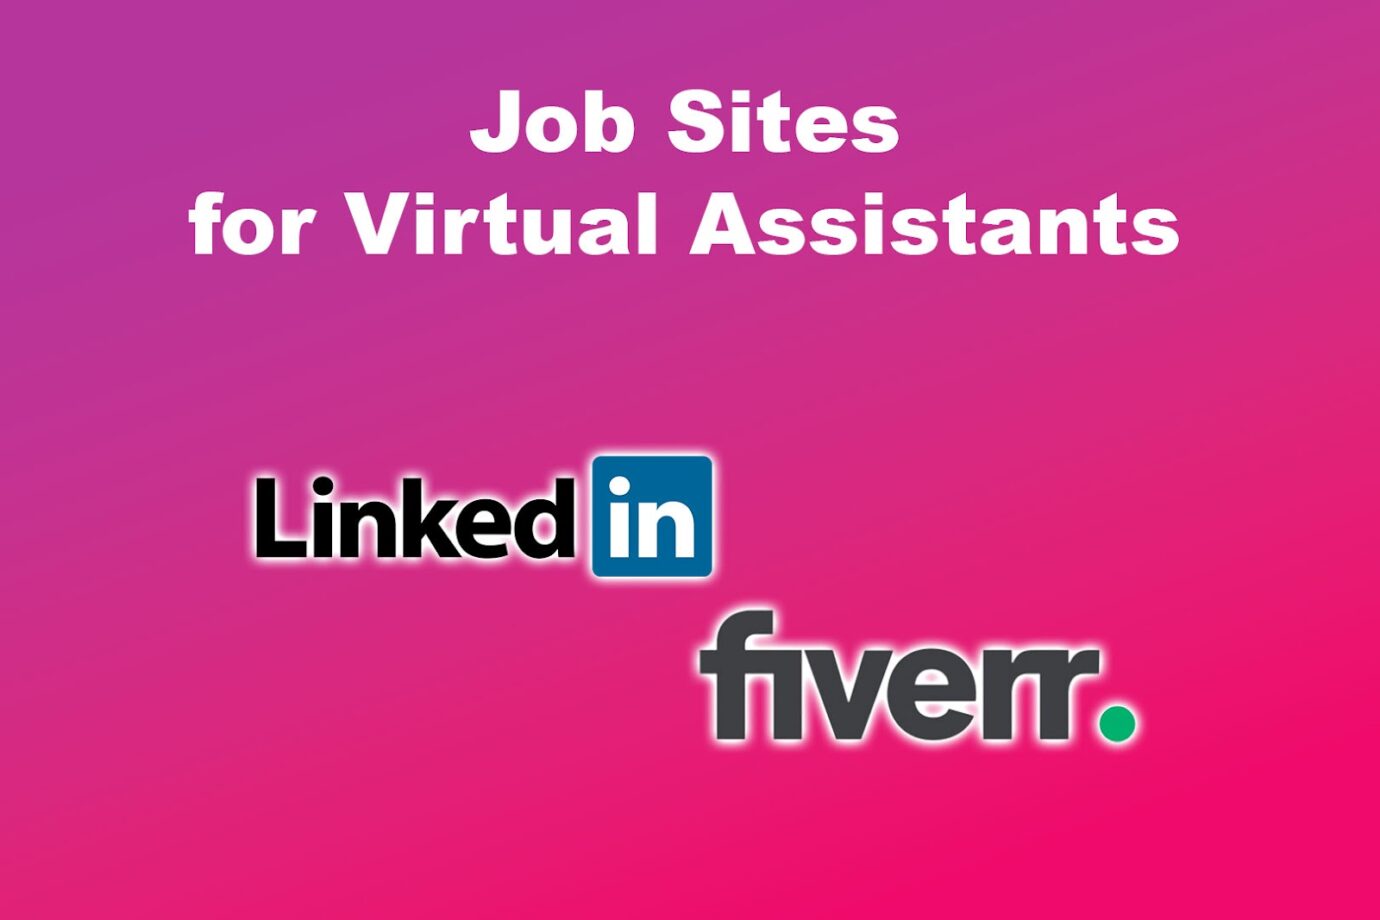 Job Sites for Virtual Assistants